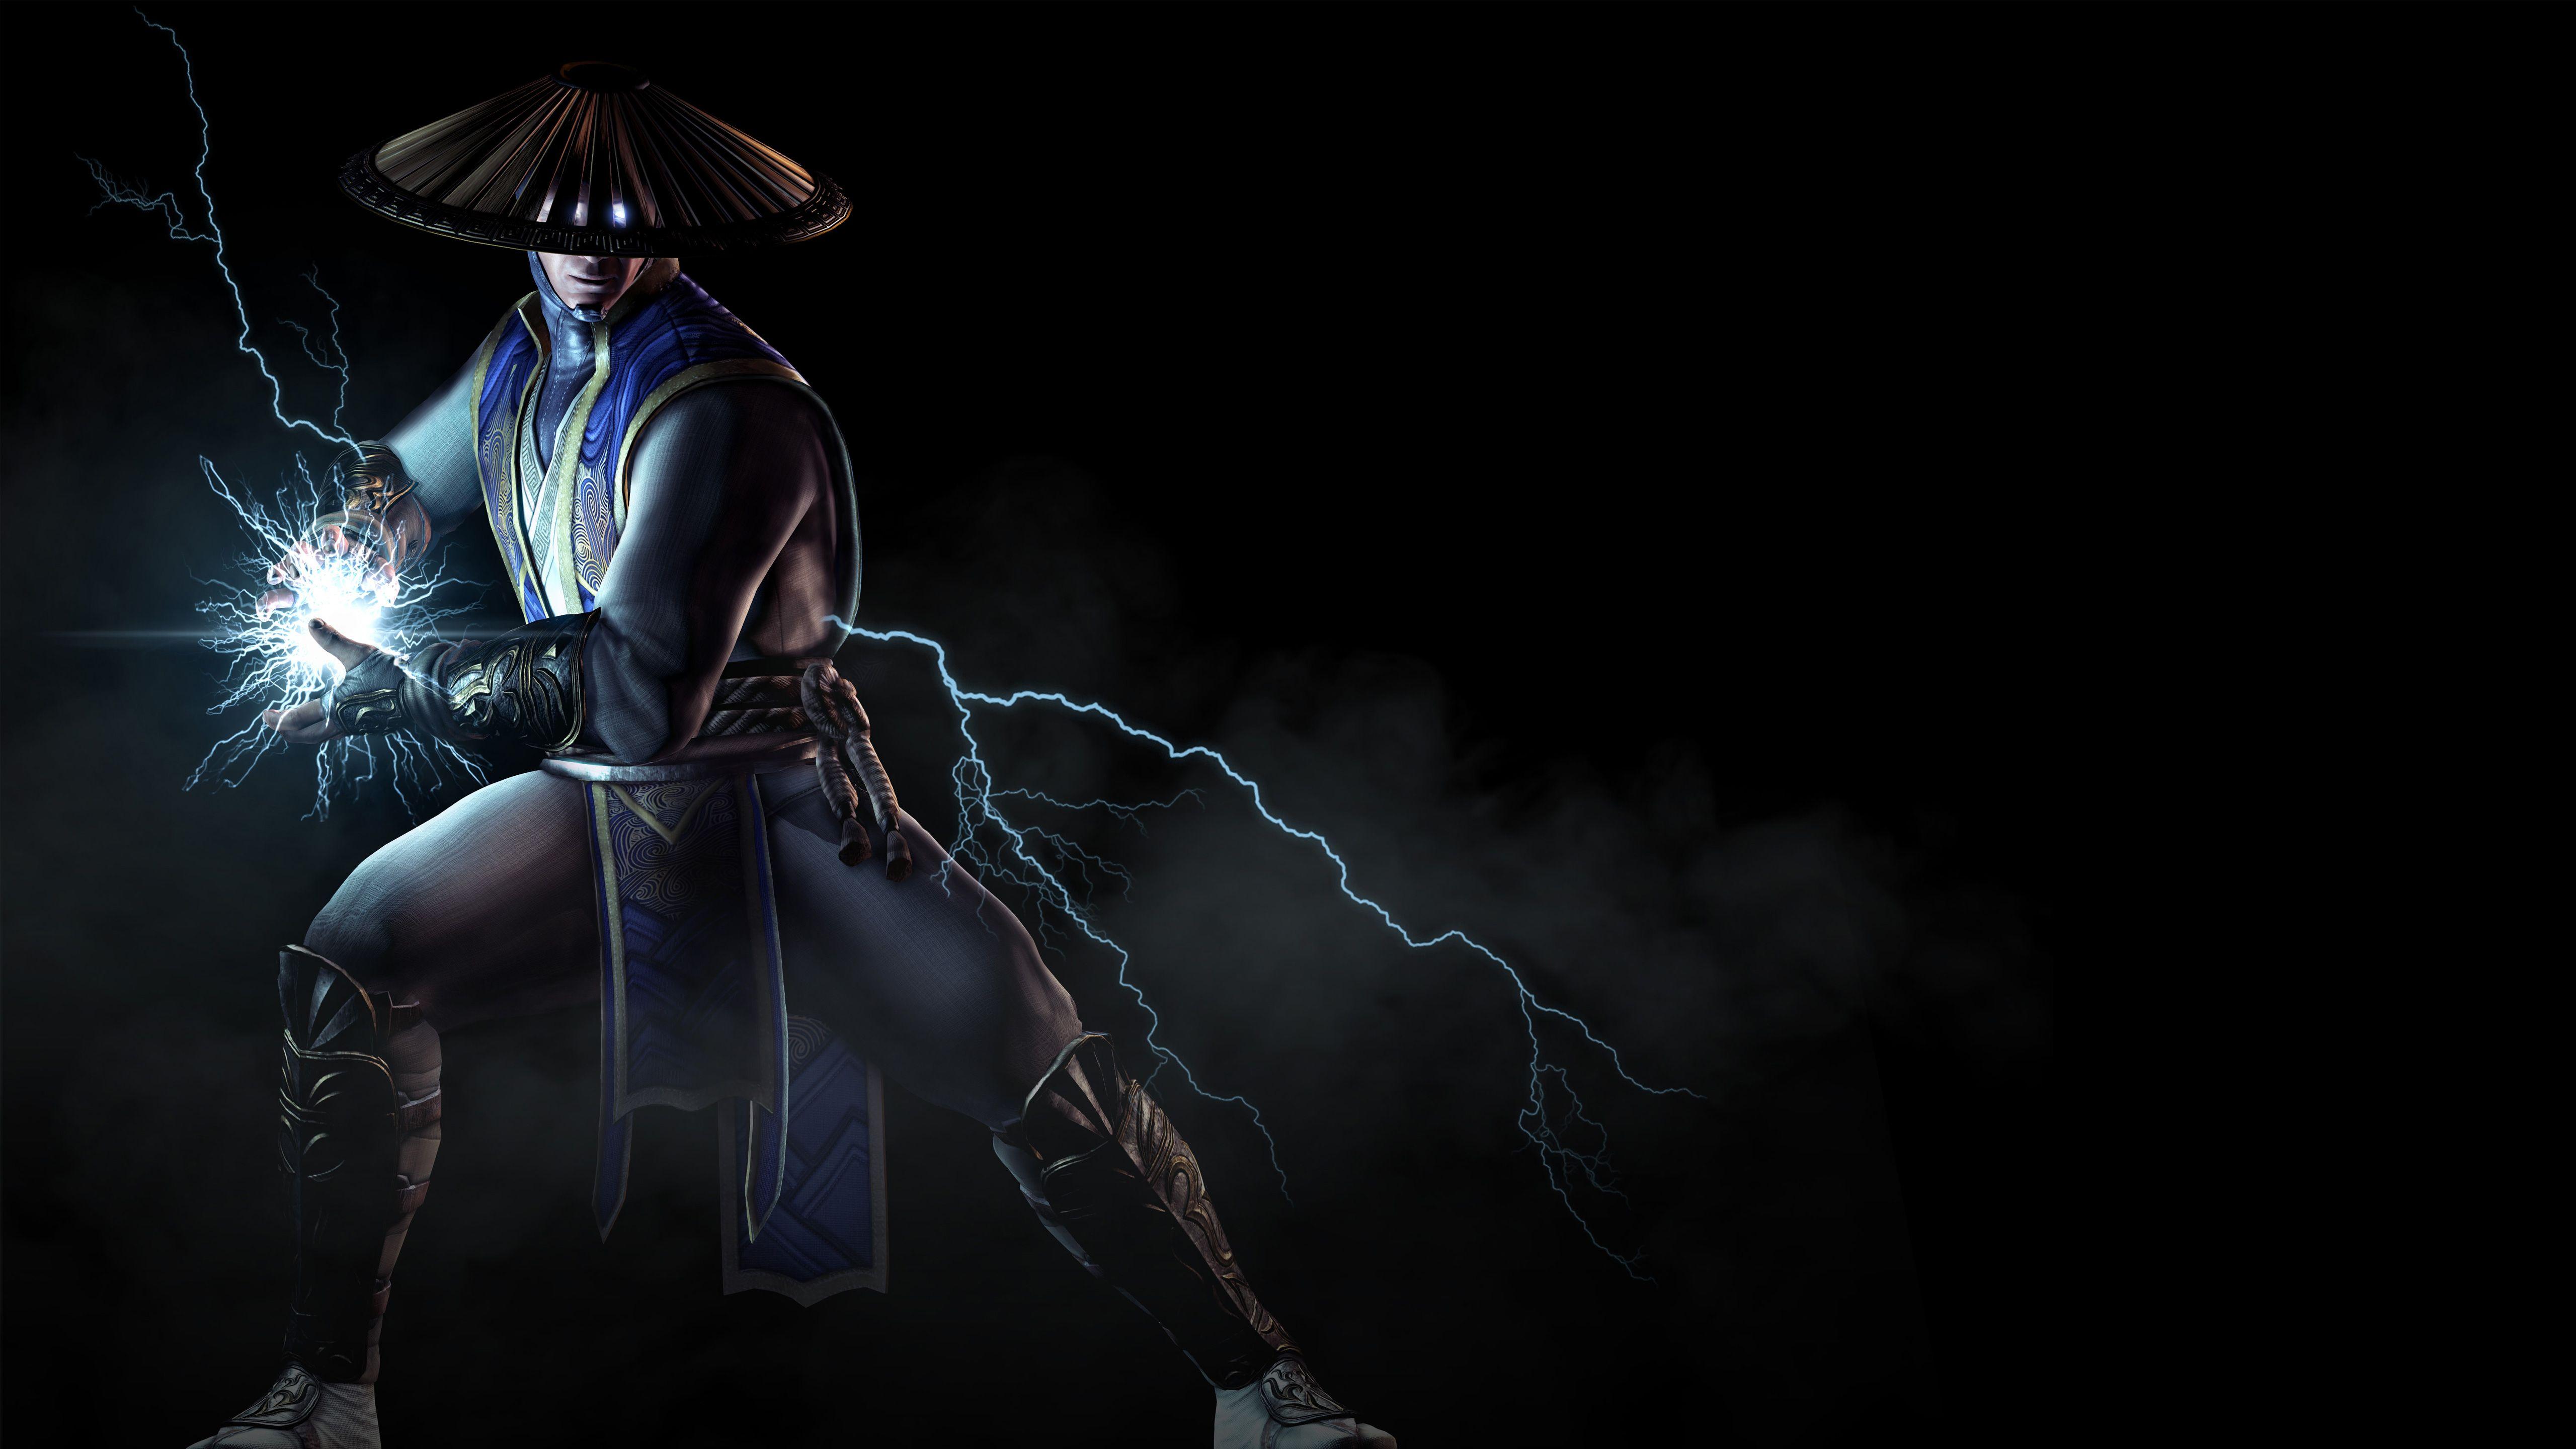 4k Mortal Kombat Wallpapers Top Free 4k Mortal Kombat Backgrounds